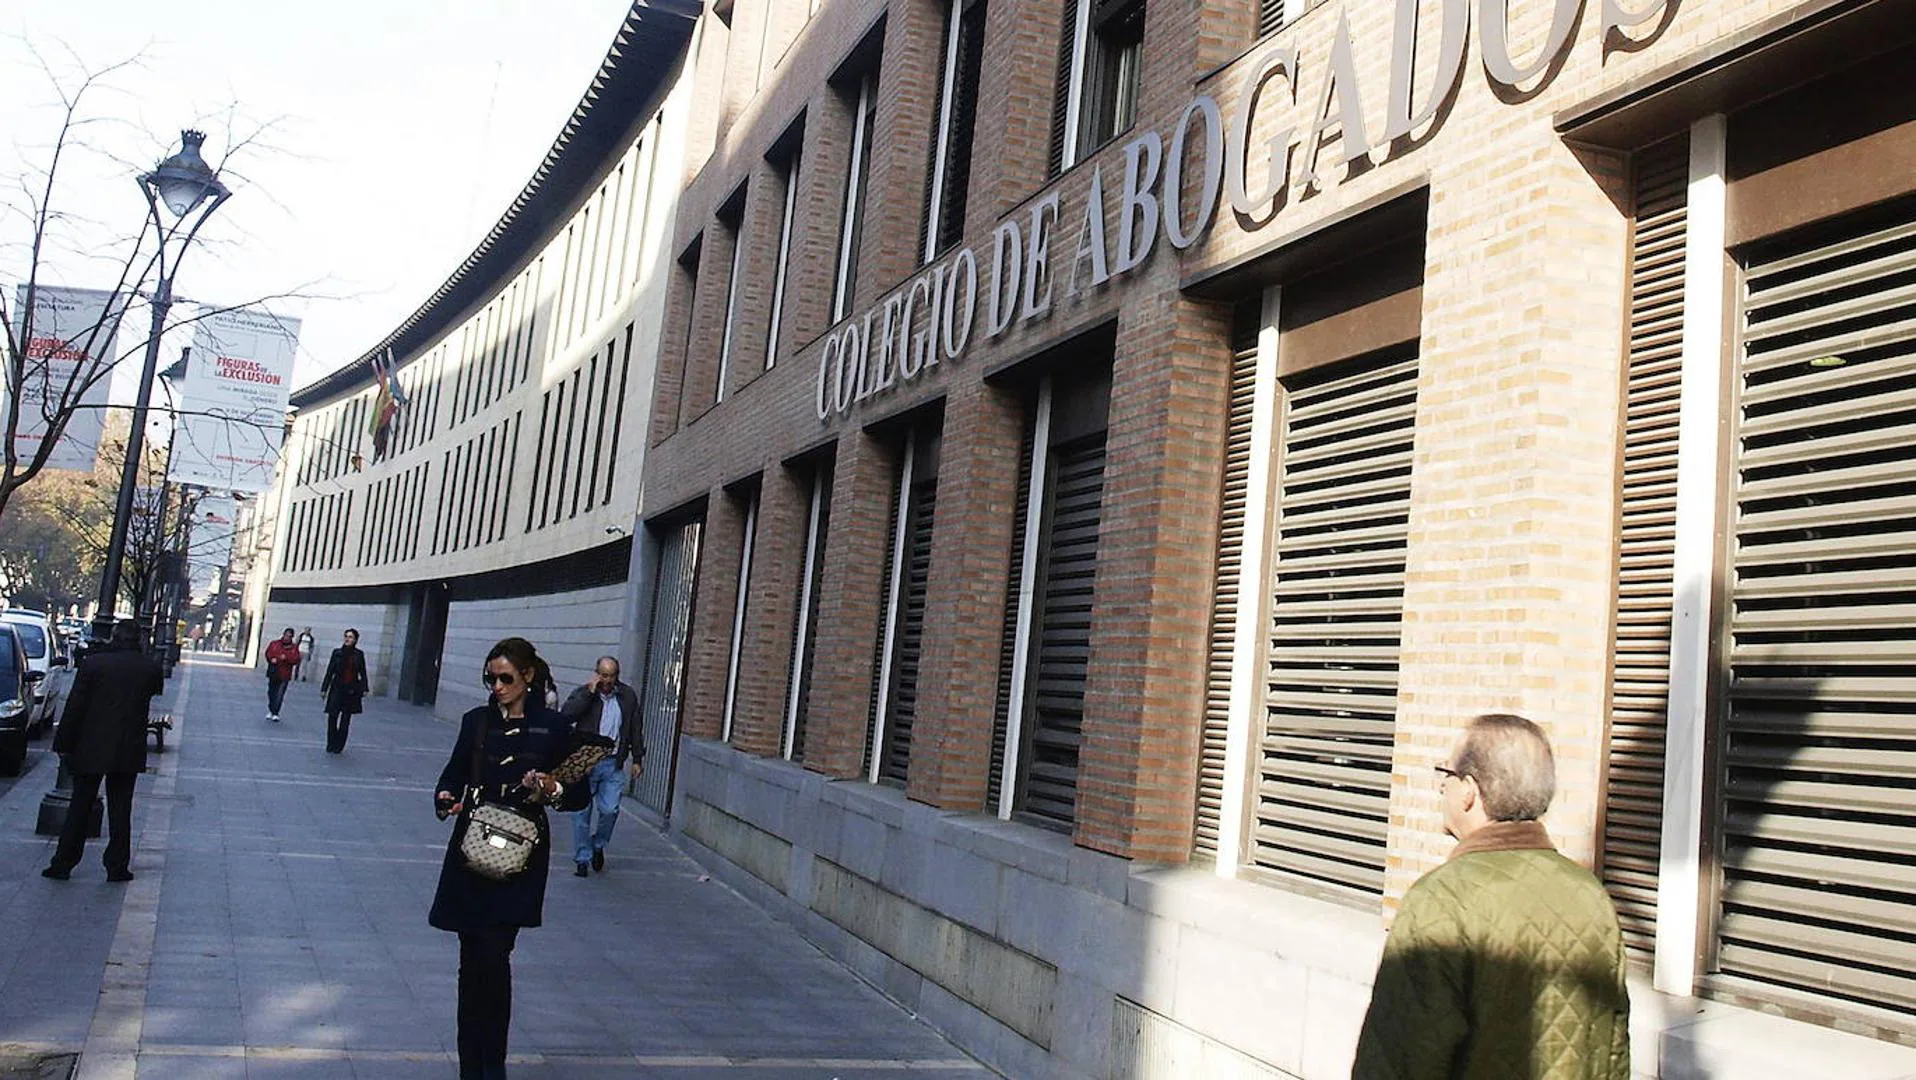 Lawyer in Valladolid Accused of Defrauding Elderly Client in Lawsuit Dispute